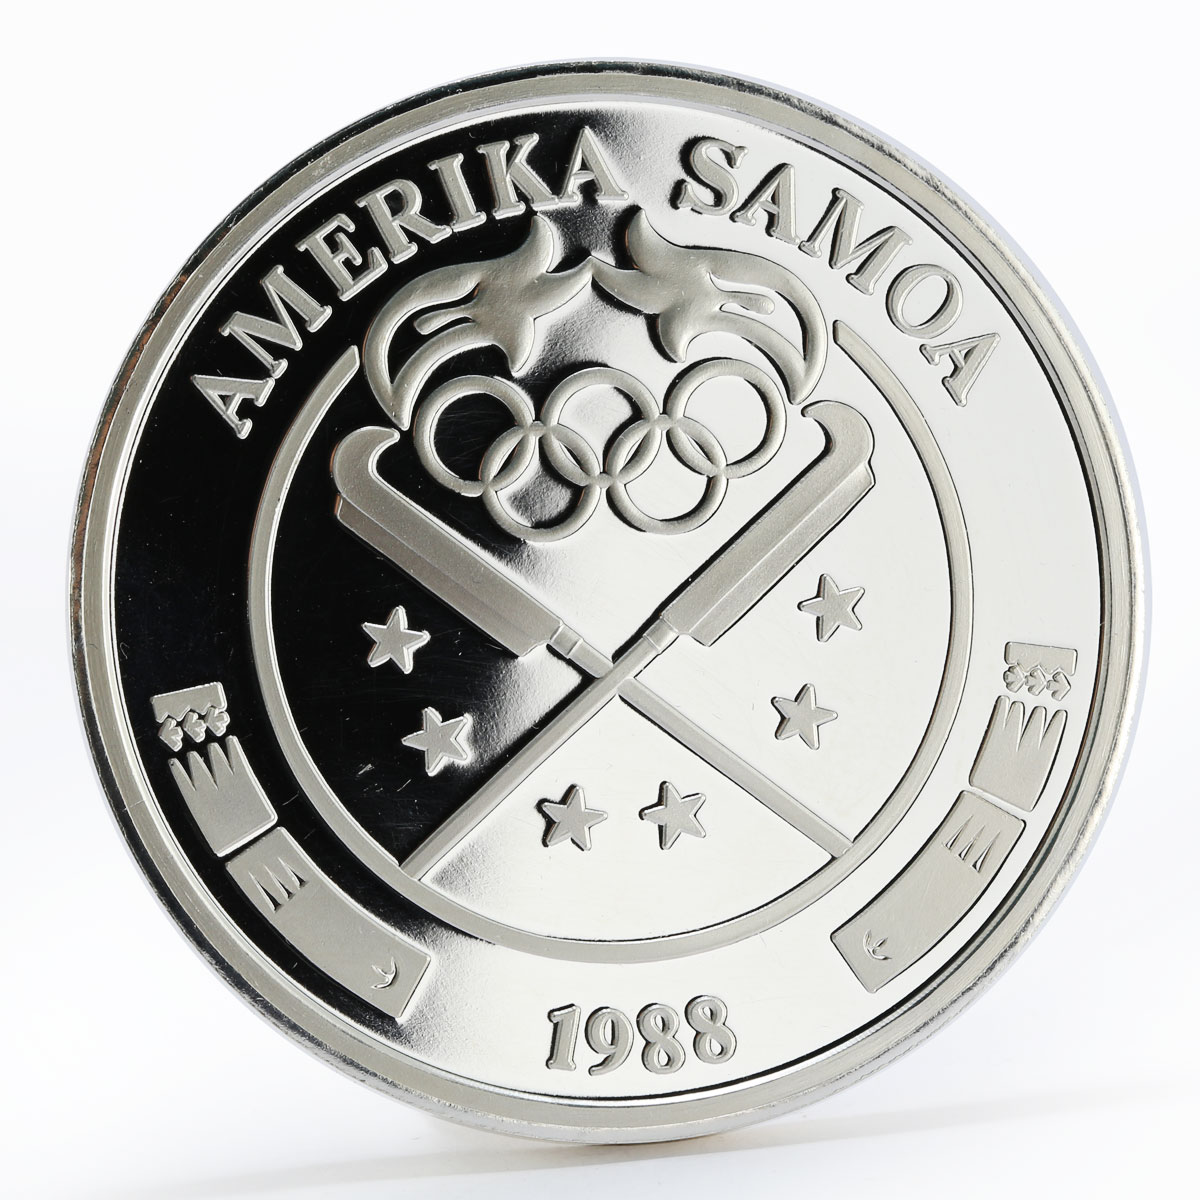 American Samoa 25 dollars XXIV Olympiad Seul Stadium proof silver coin 1988